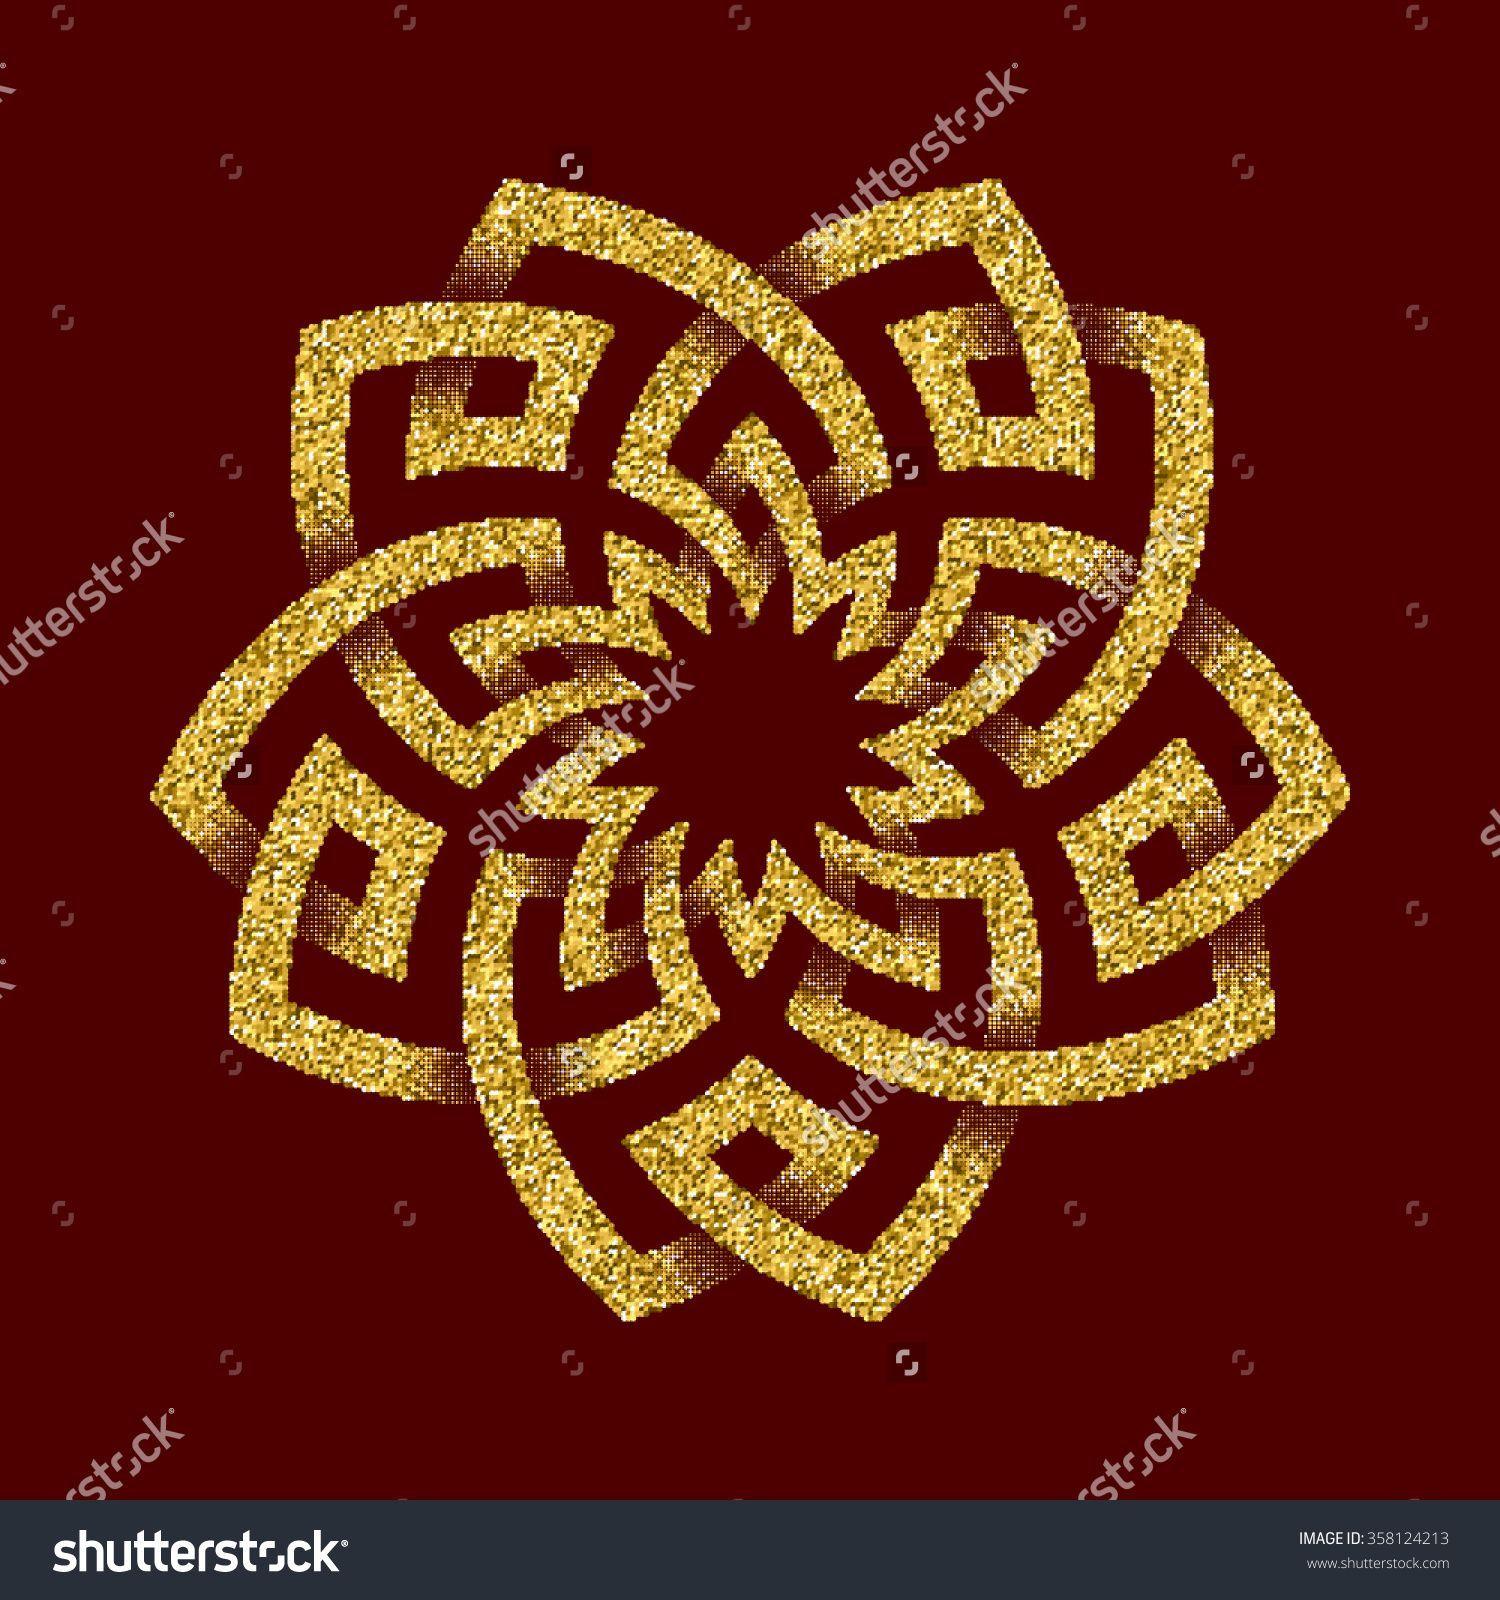 Red Pentagon Logo - Golden glittering #logo template in #Celtic knots style on dark red